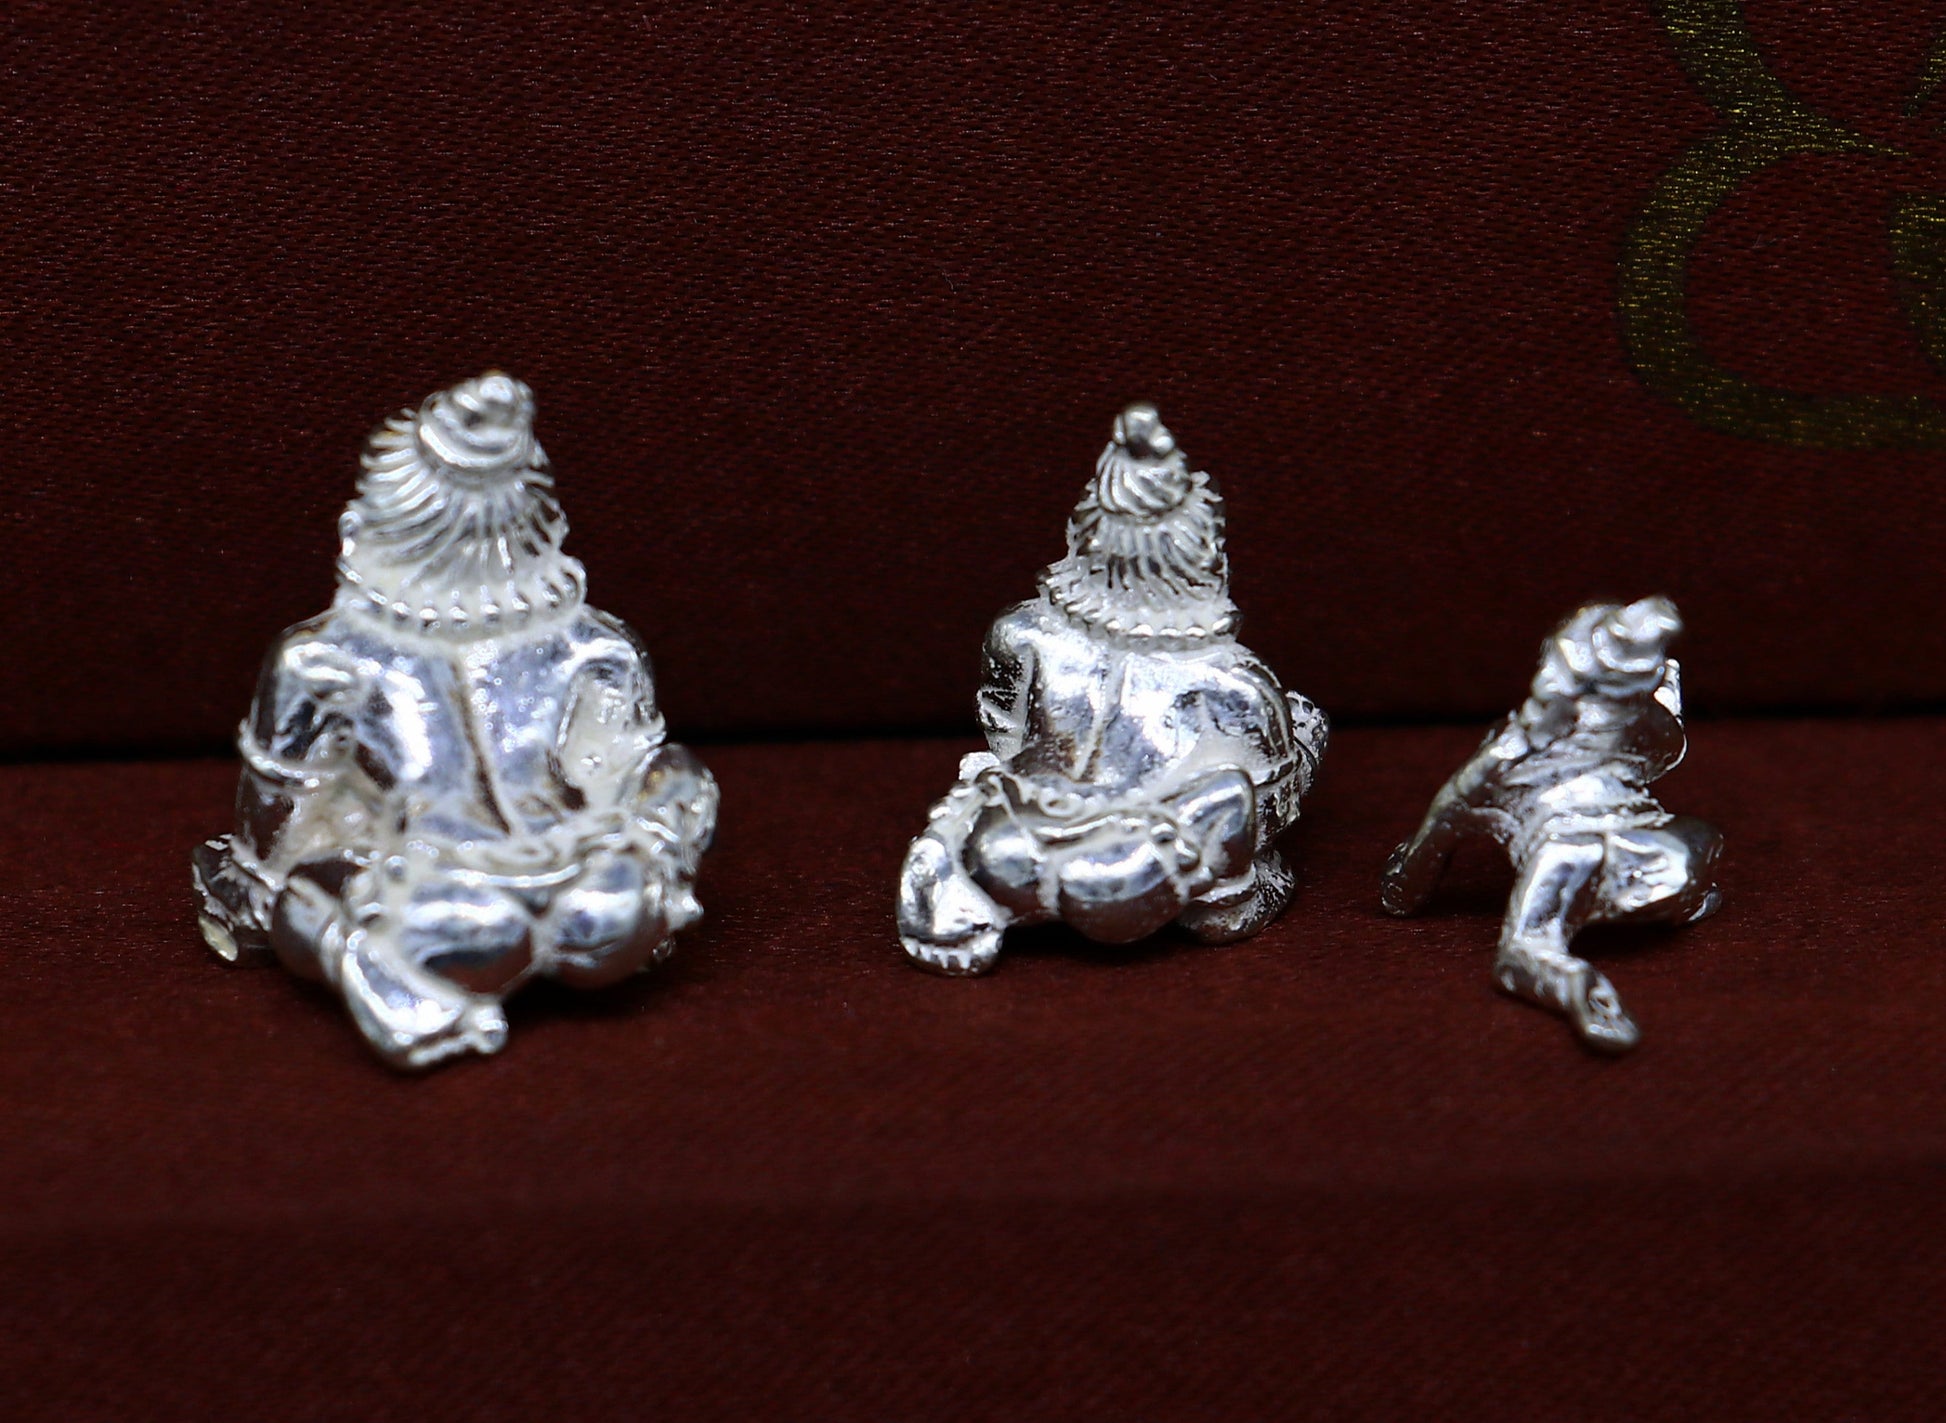 Solid silver handmade customized idol little krishna, Ladu Gopal,crawling Krishna small statue sculpture home temple puja articles su370 - TRIBAL ORNAMENTS